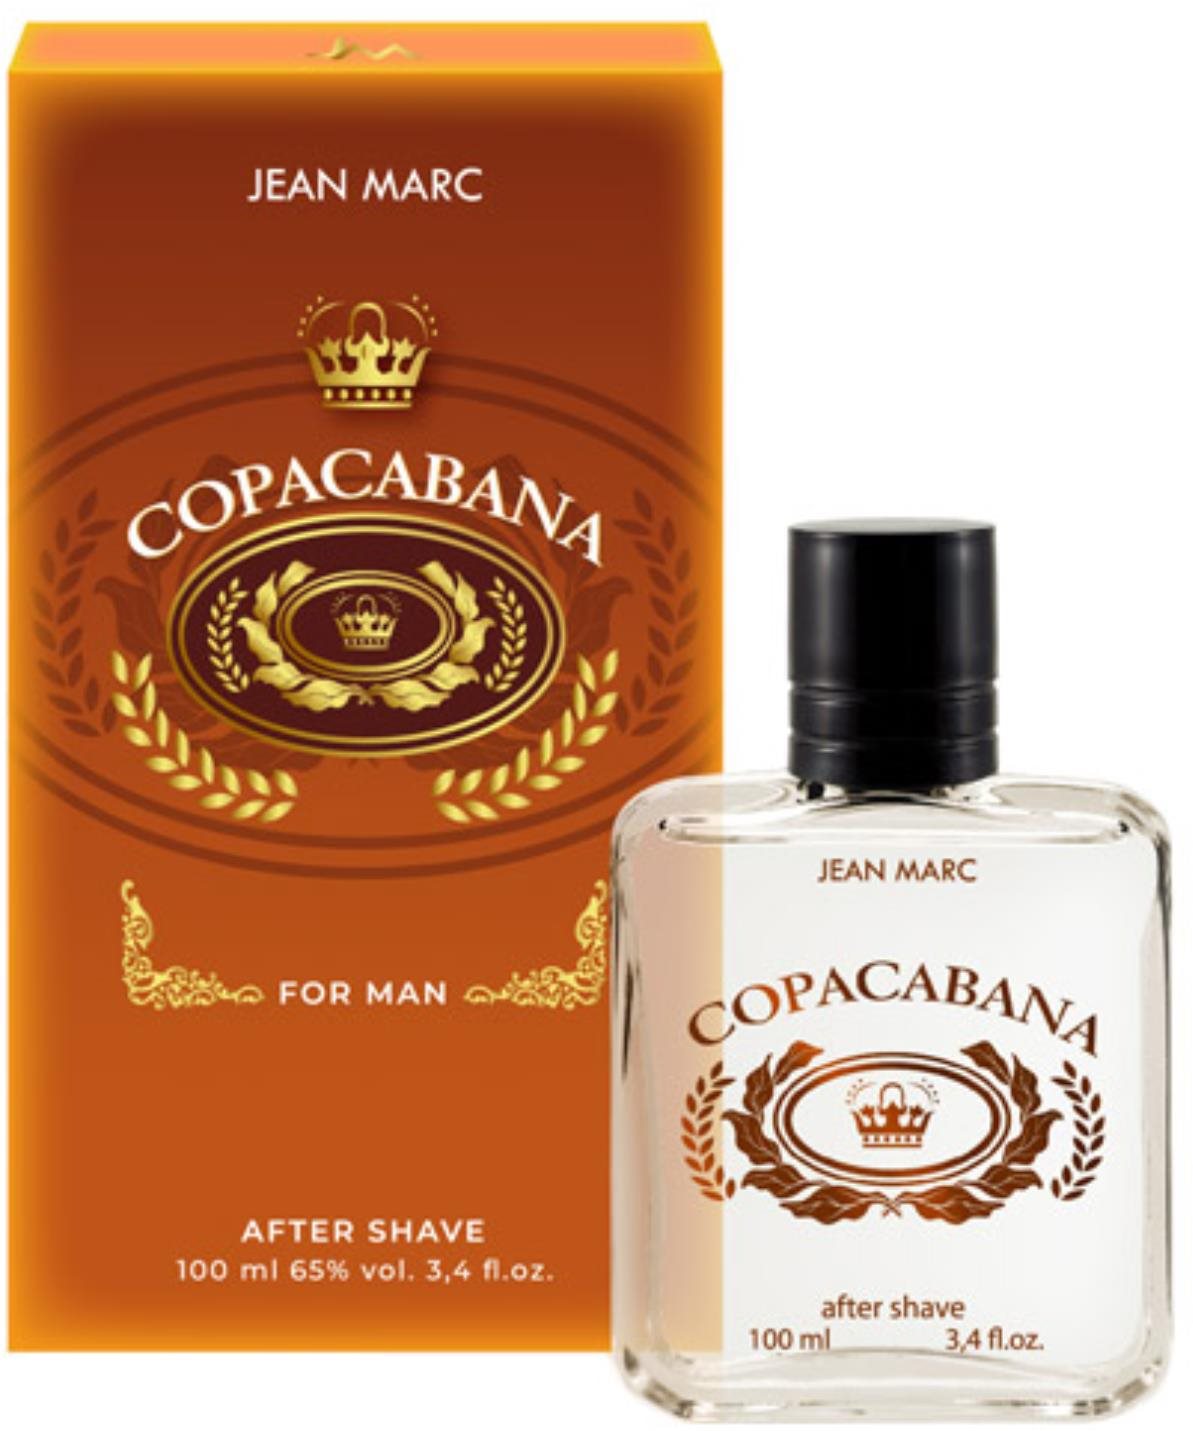 Aftershave JEAN MARC Copacabana aftershave 100 ml